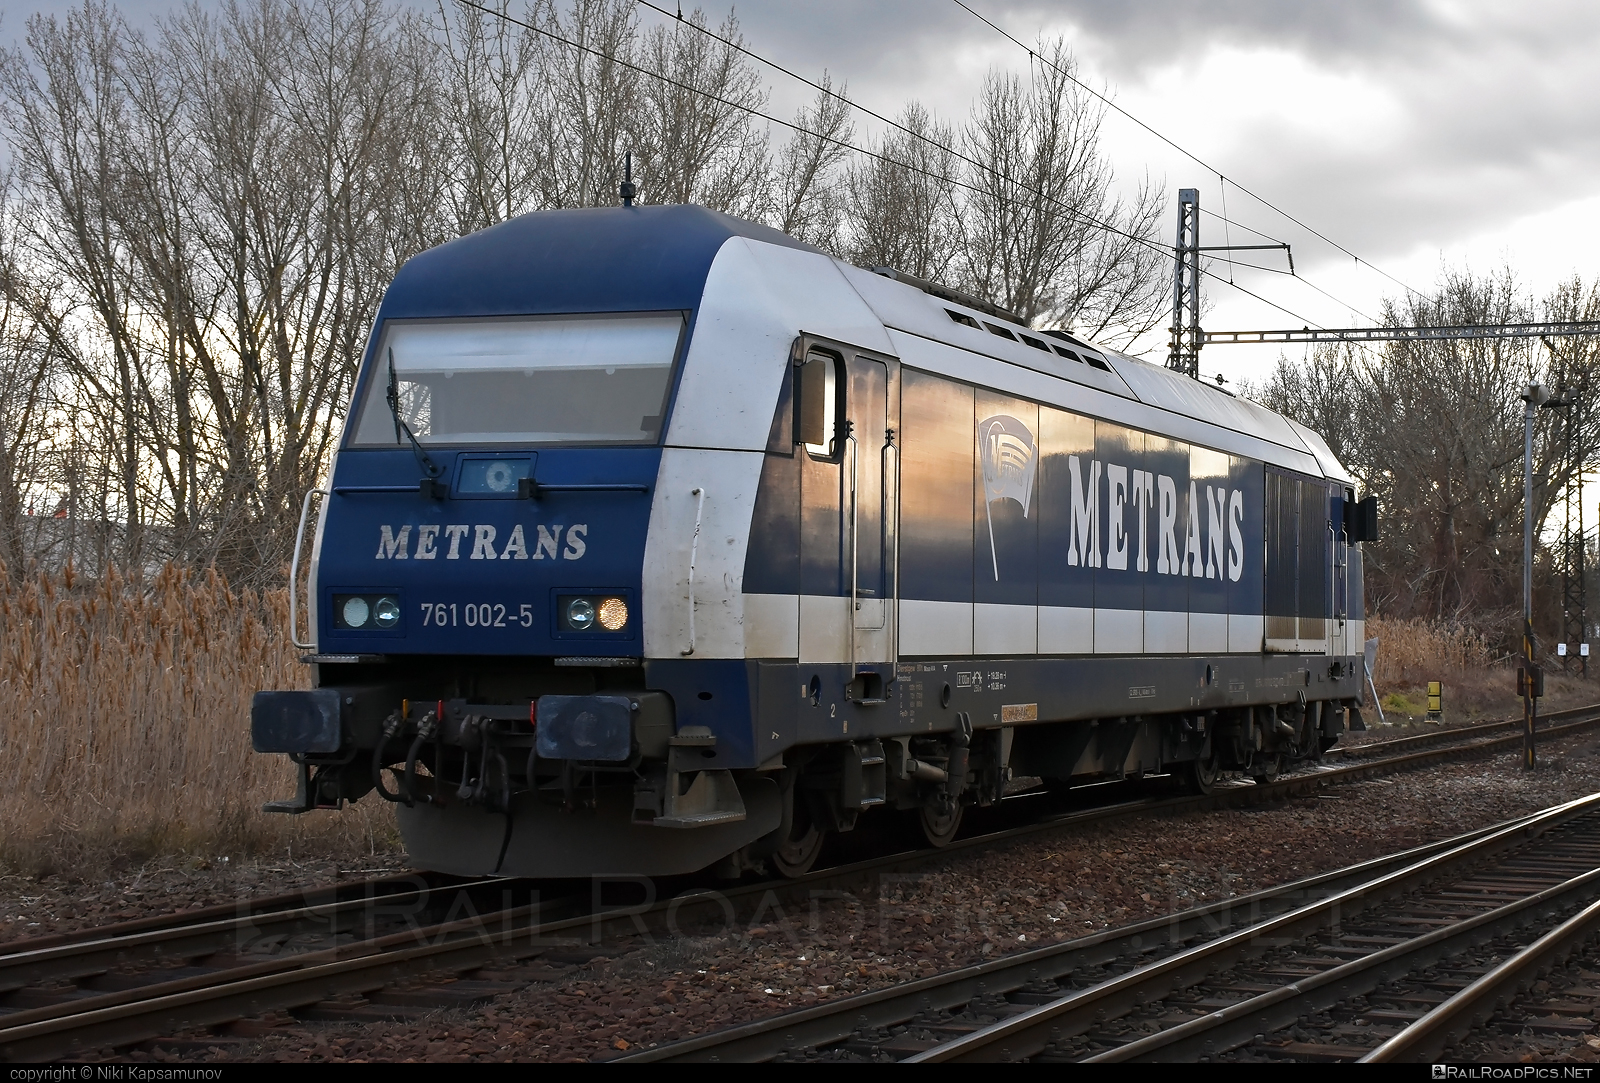 Siemens ER20 - 761 002-5 operated by METRANS (Danubia) a.s. #er20 #er20hercules #eurorunner #hercules #hhla #metrans #metransdanubia #siemens #siemenser20 #siemenser20hercules #siemenseurorunner #siemenshercules